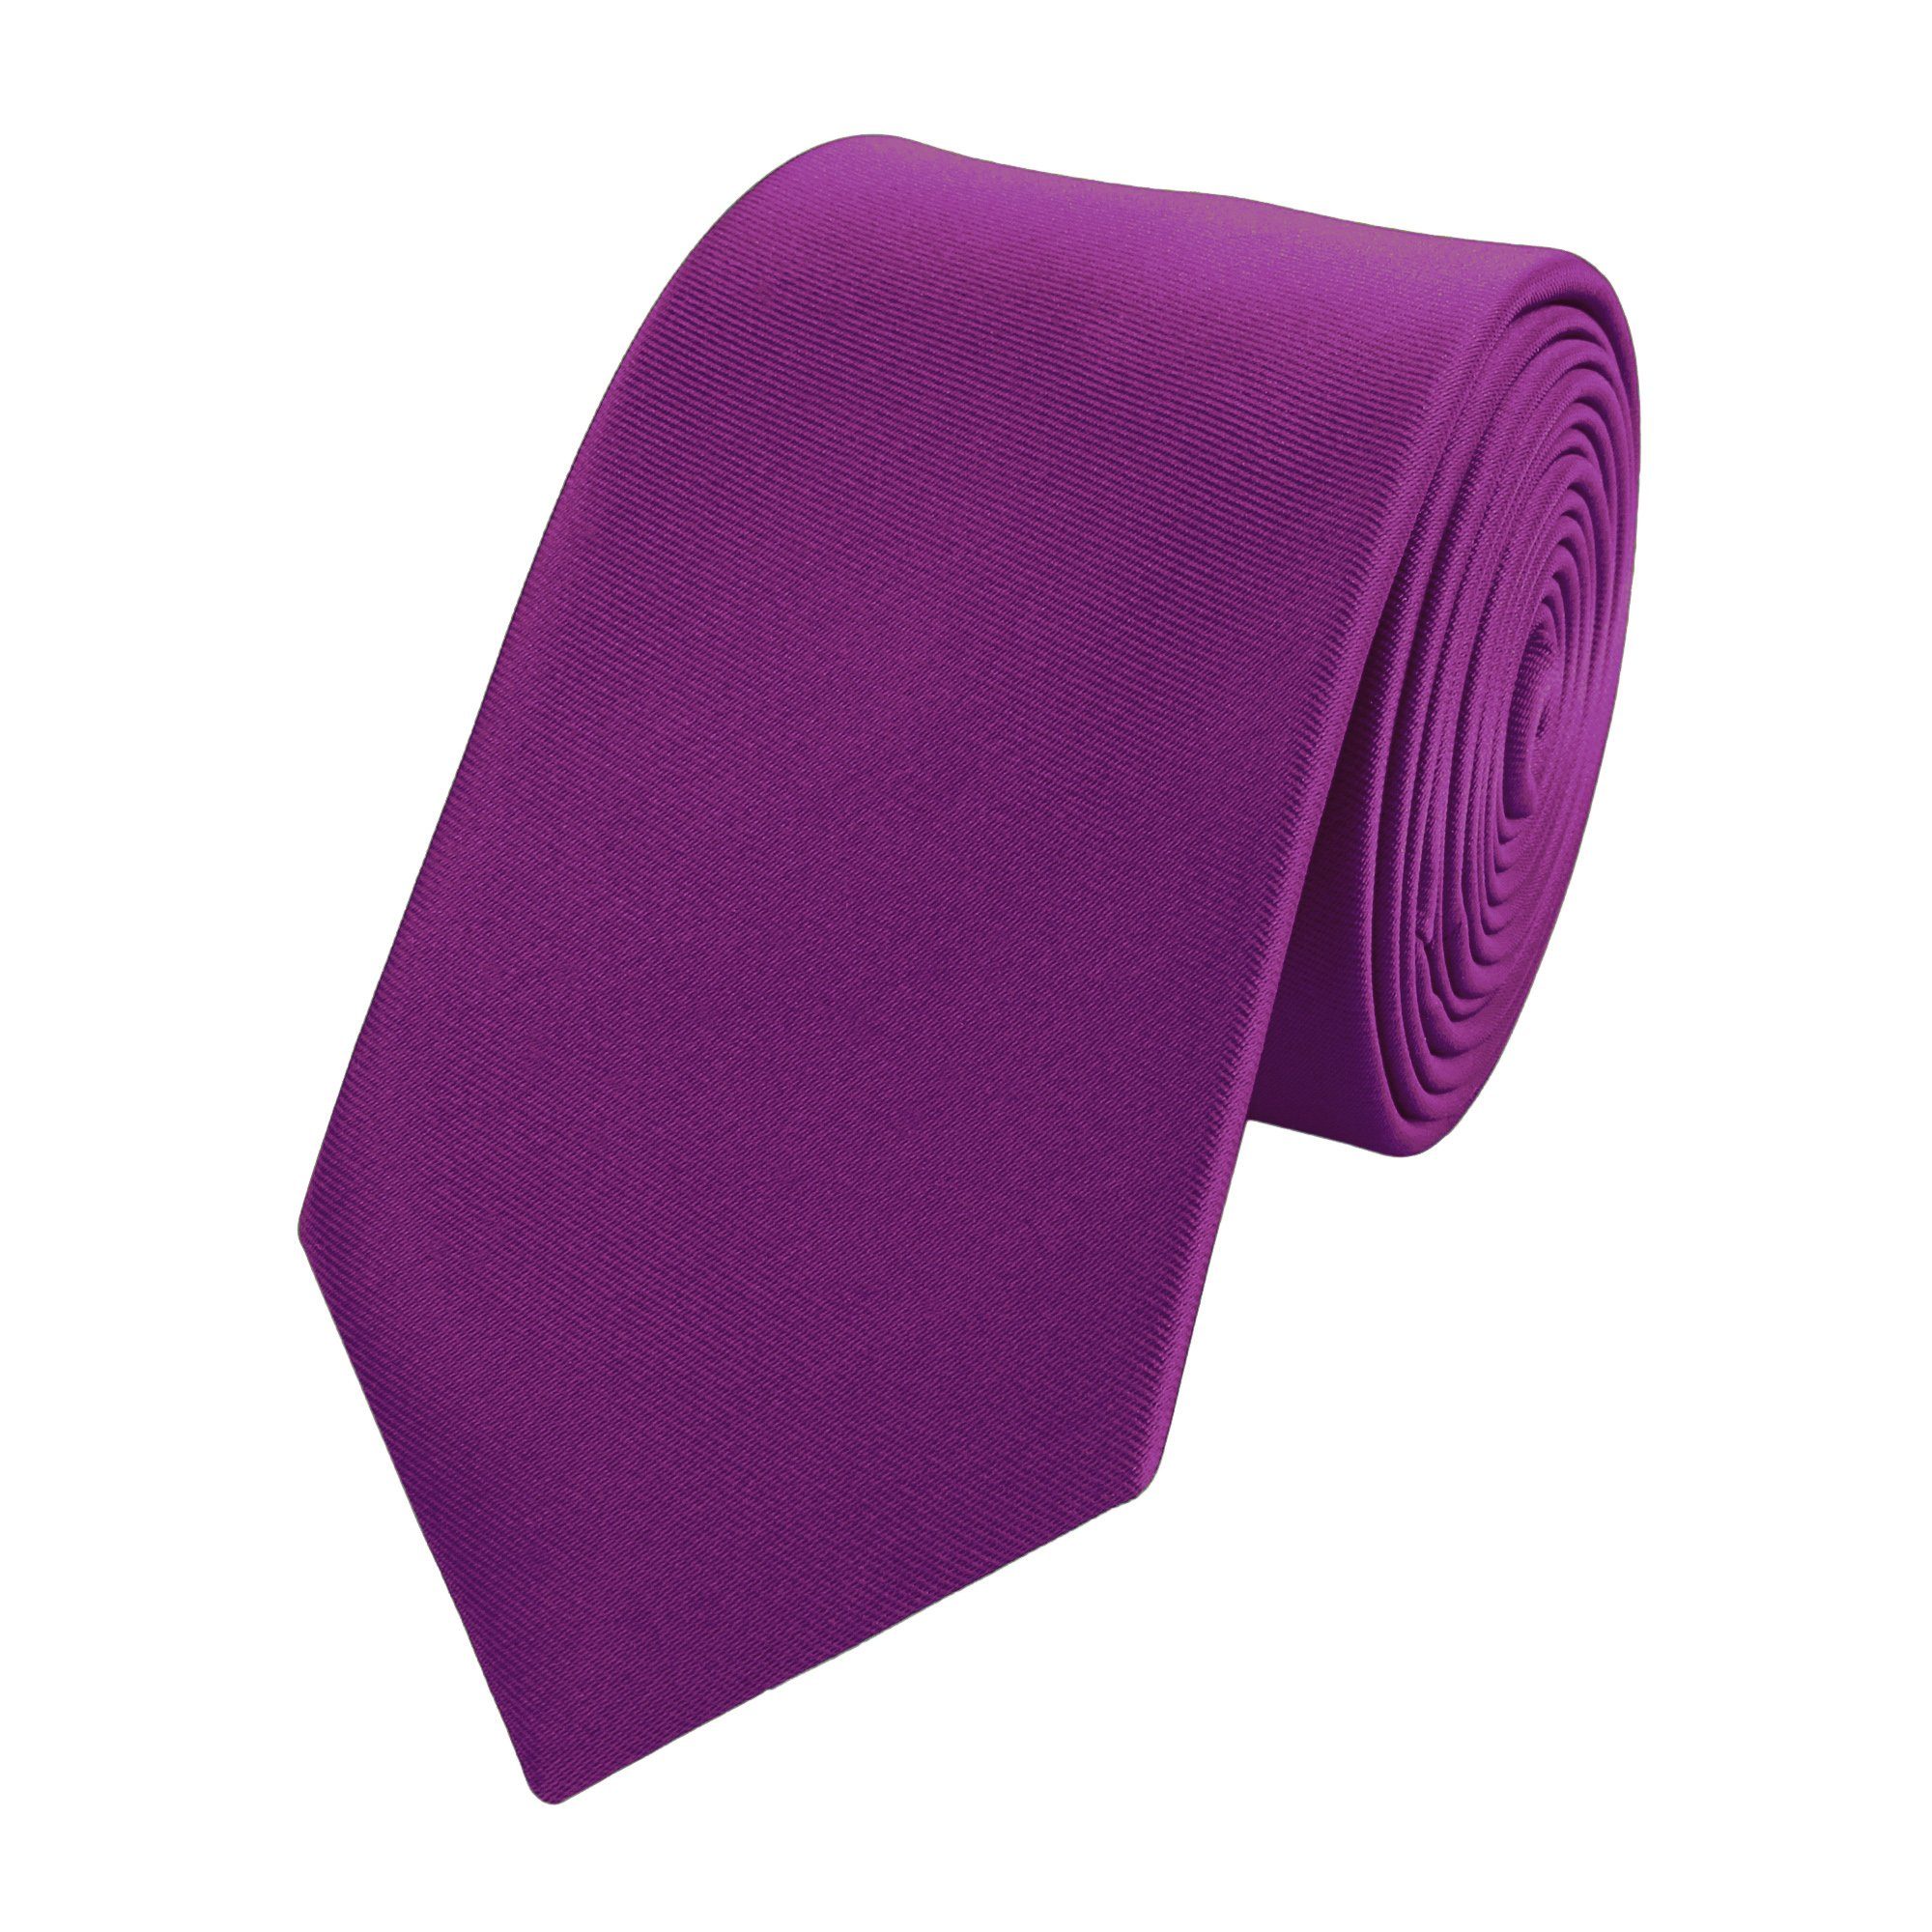 Fabio Farini Krawatte Herren Krawatte Lila - verschiedene Lila Männer Schlips in 6cm (ohne Box, Unifarben) Schmal (6cm), Flieder - Purple Orchid